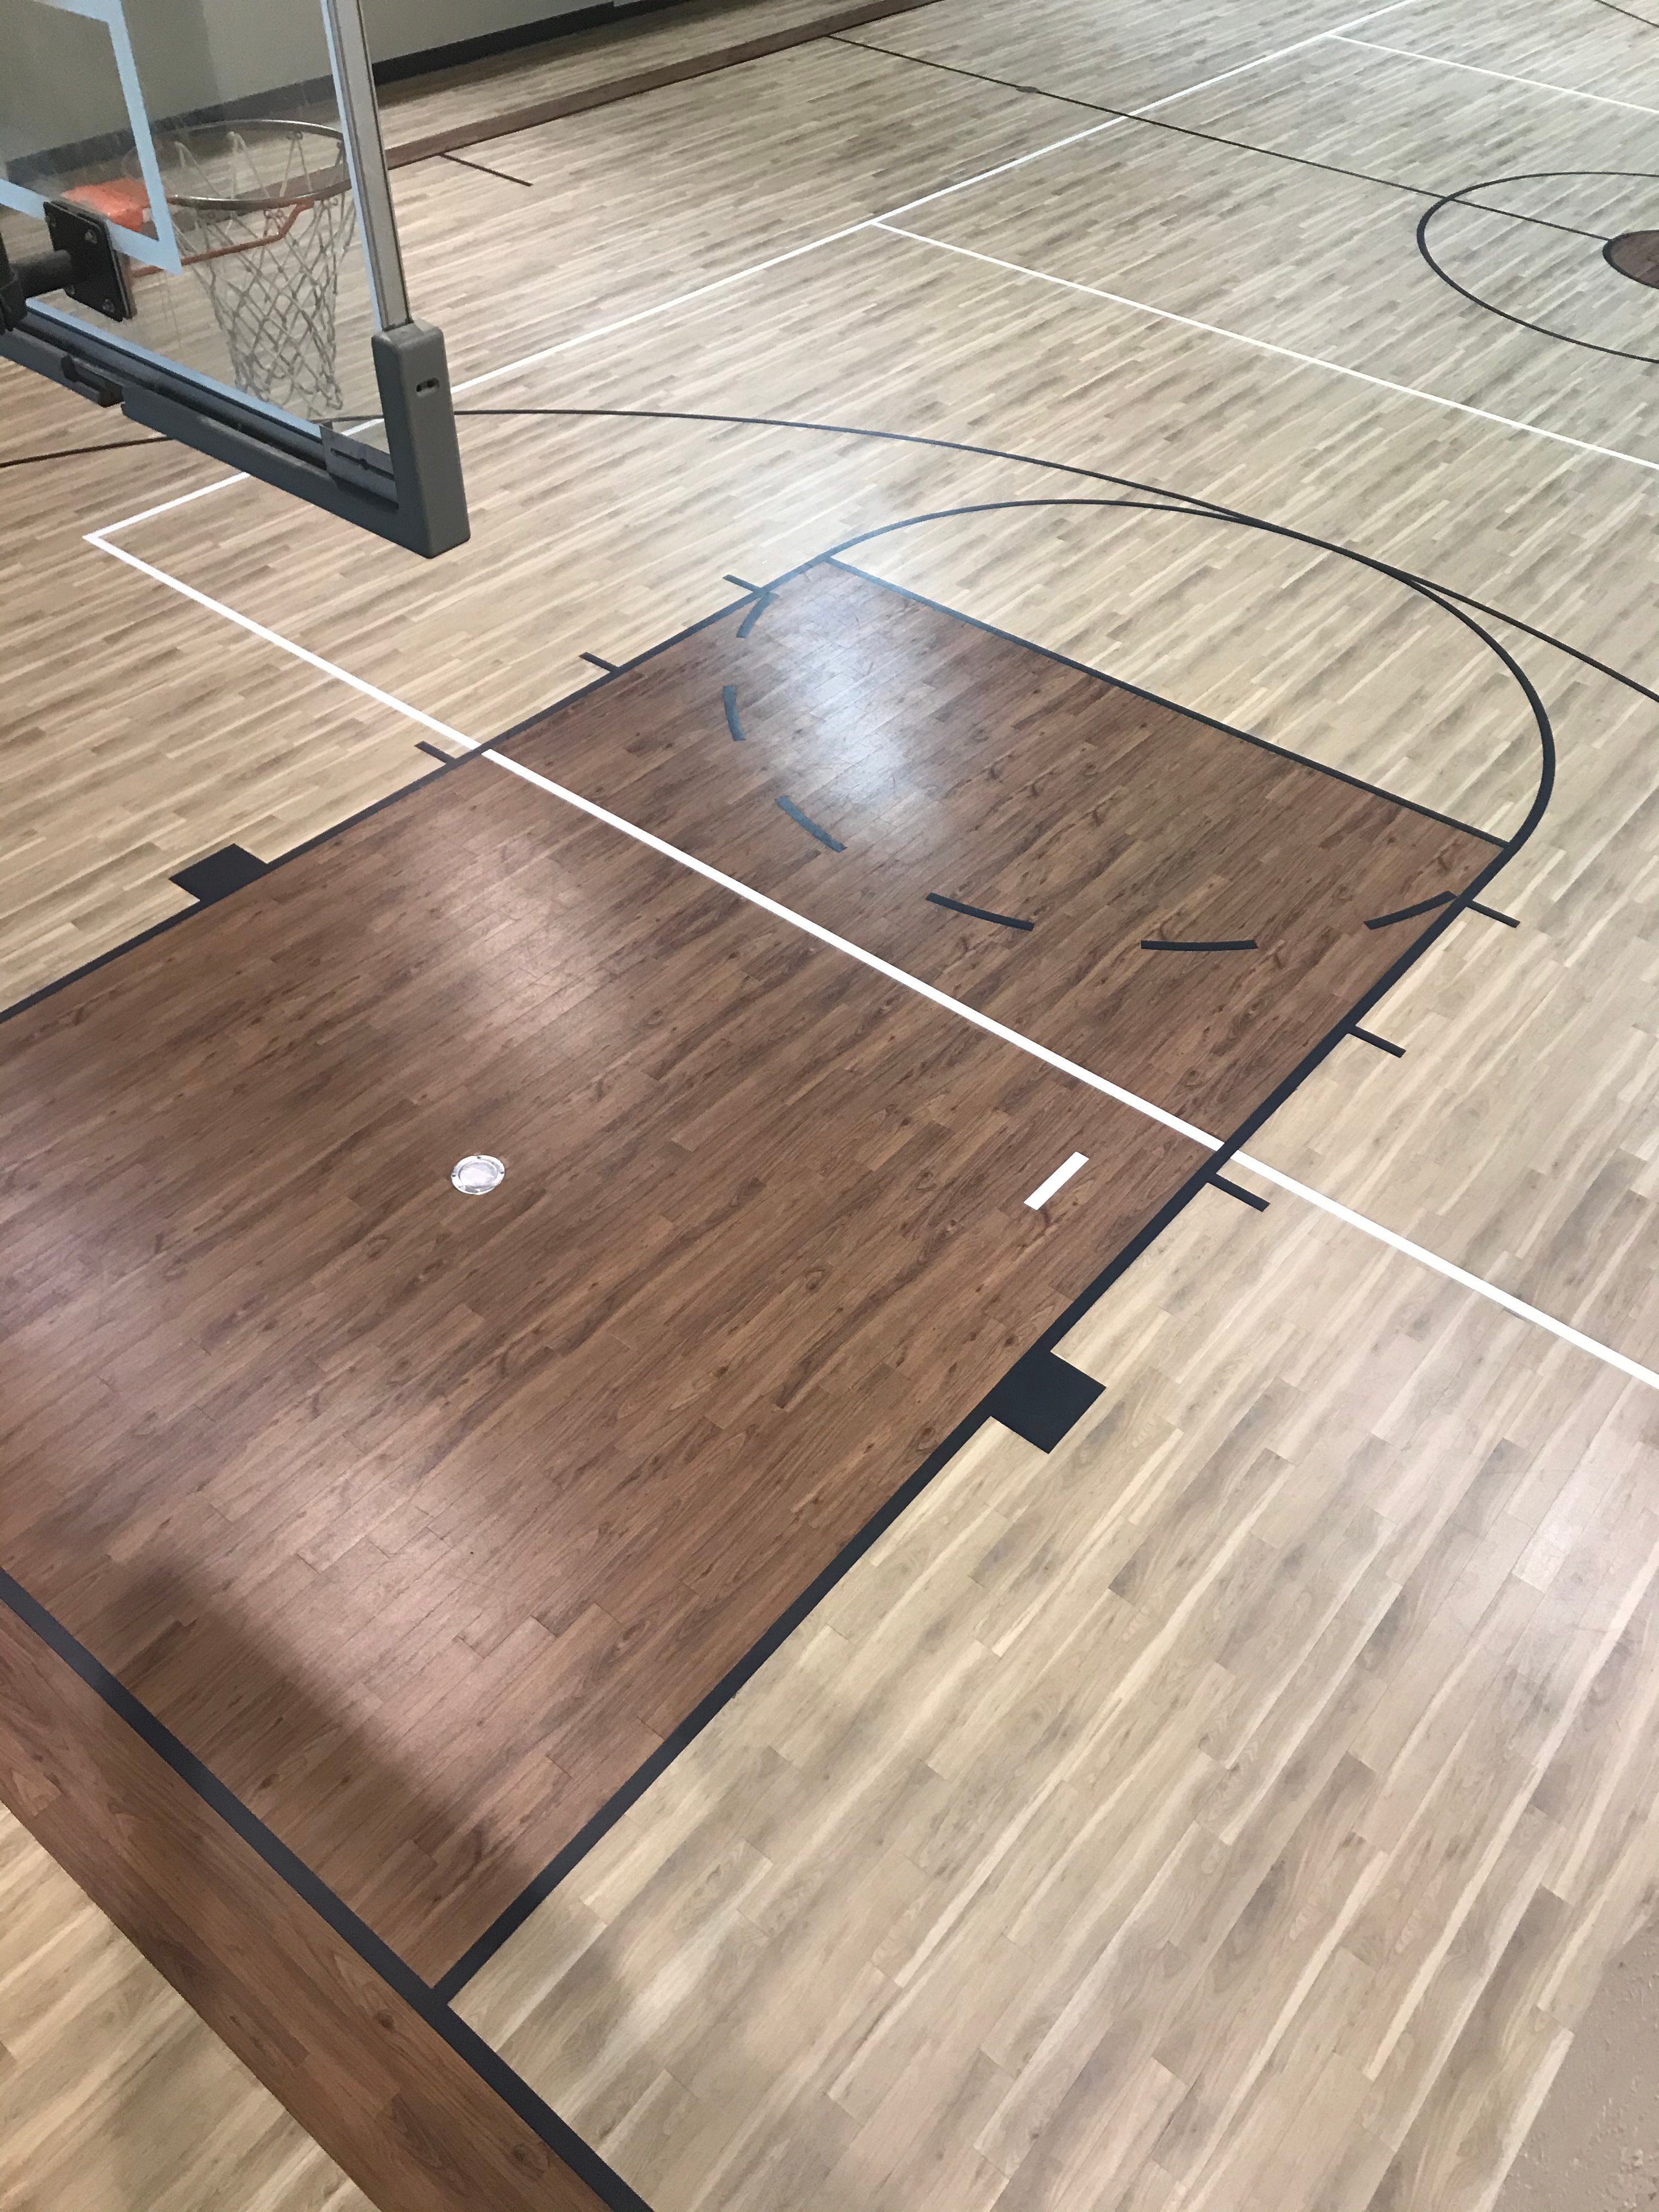 Maple flooring for professional-level basketball court